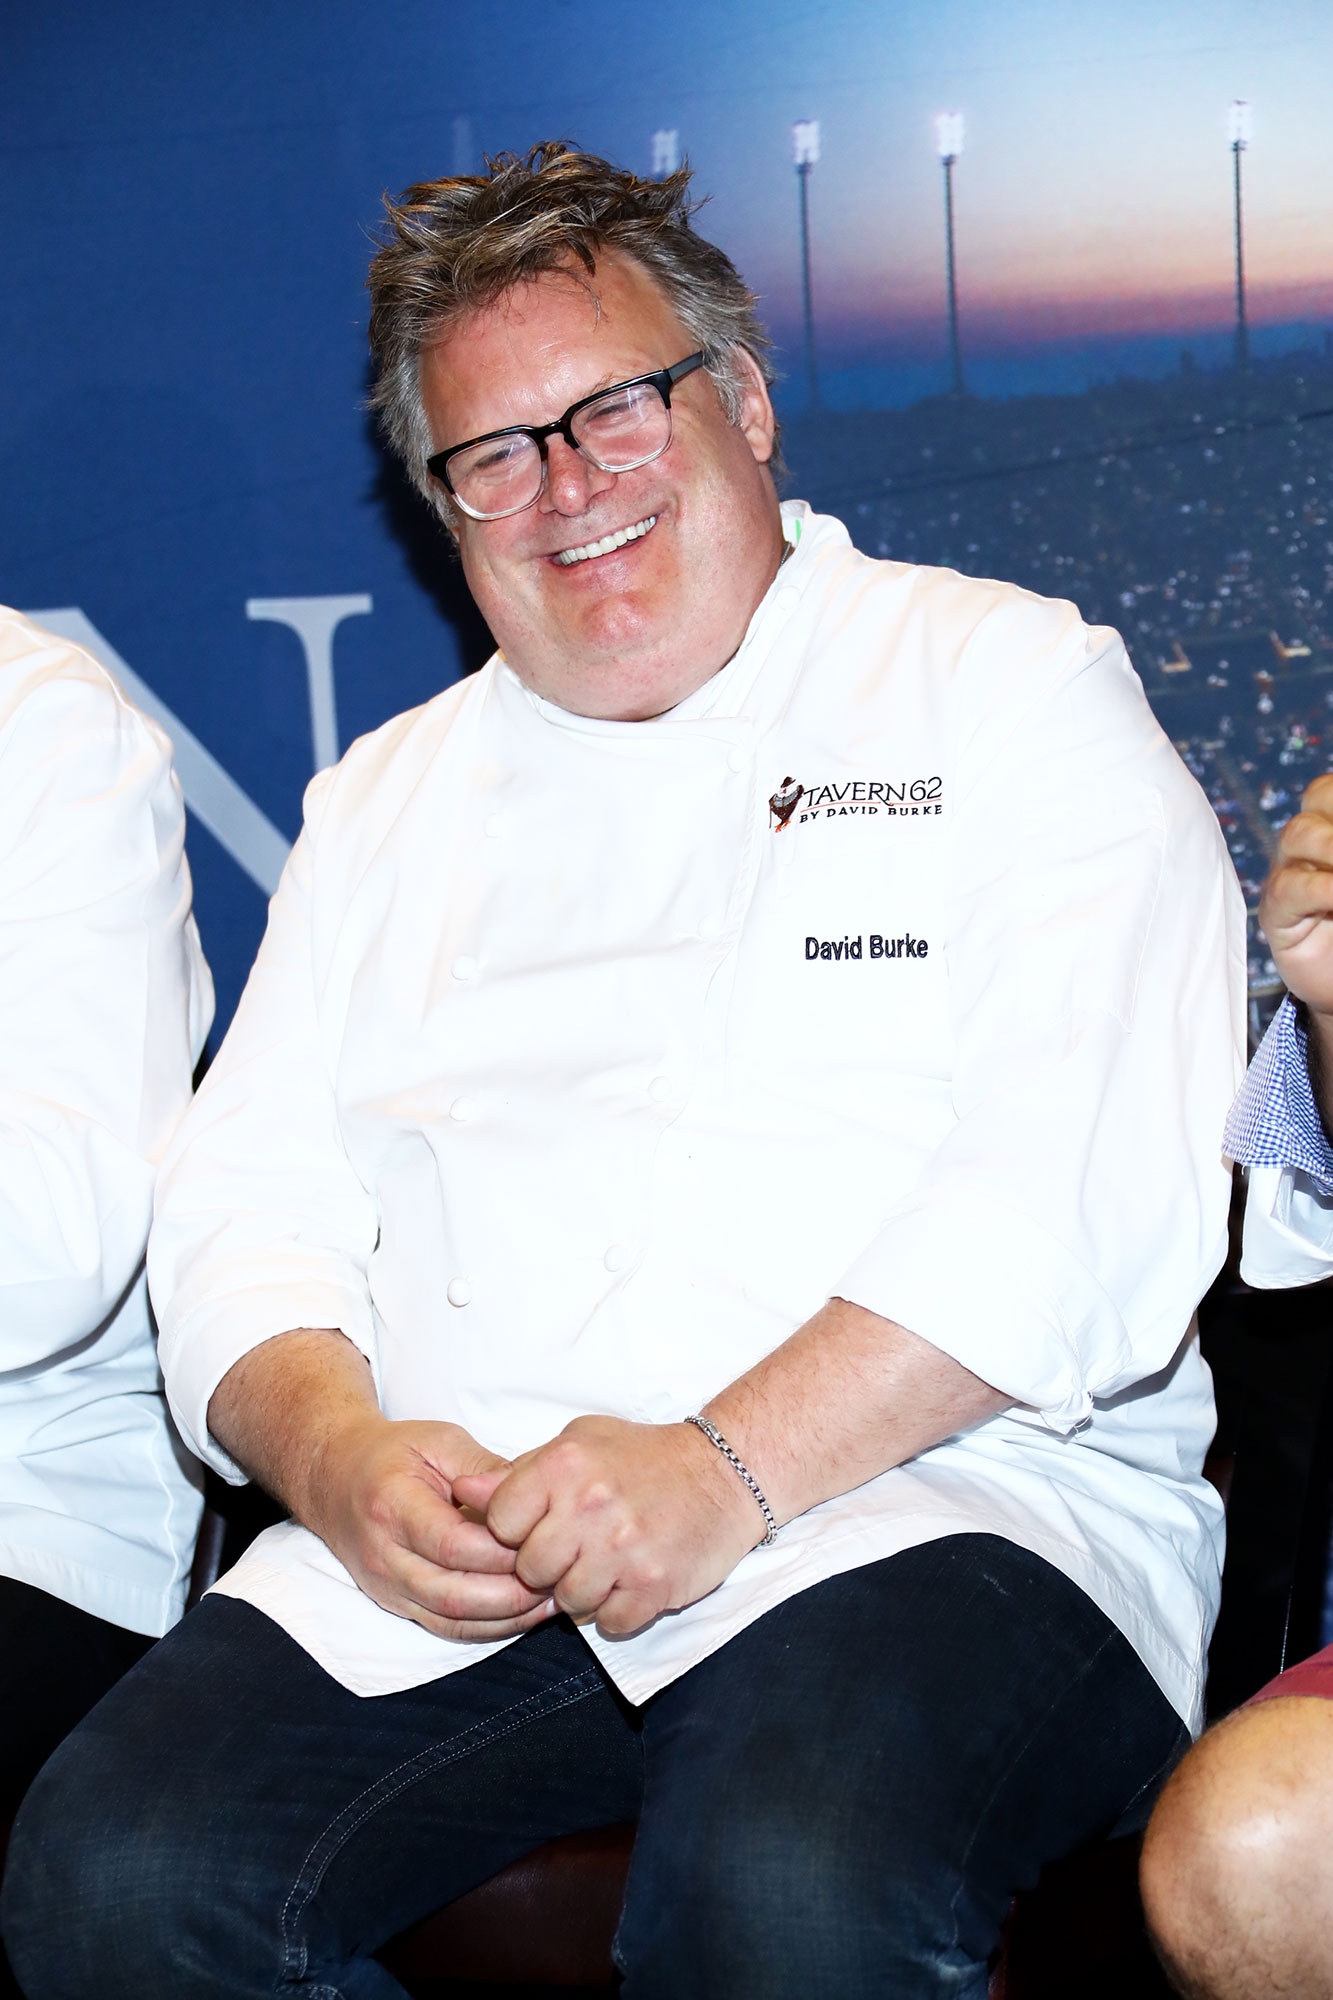 About Chef David Burke – Chef David Burke